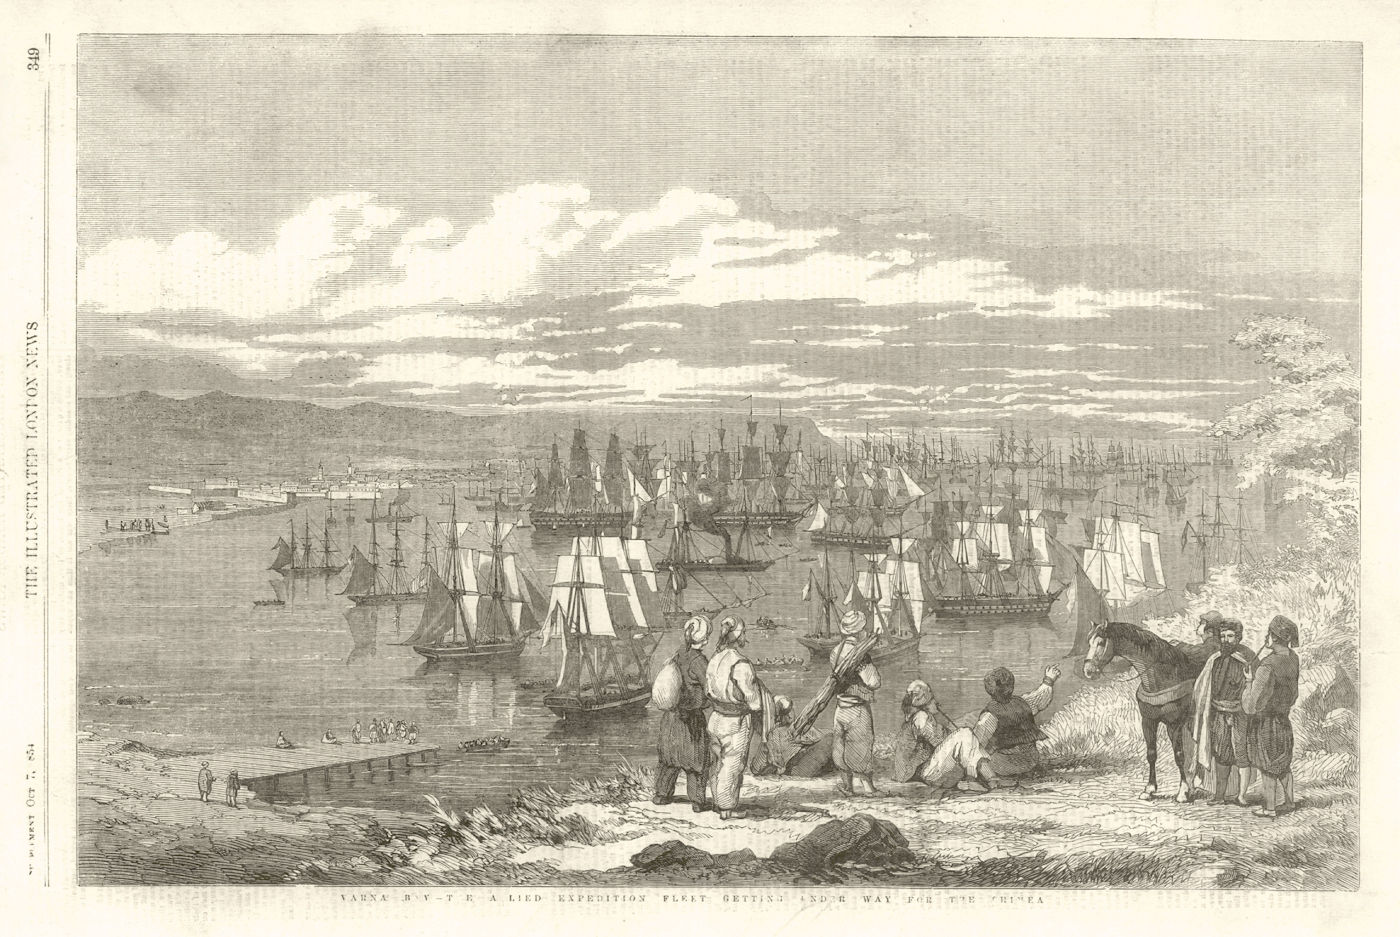 Associate Product Varna Bay. Allied Expedition Fleet setting sail. Bulgaria. Crimean War 1854